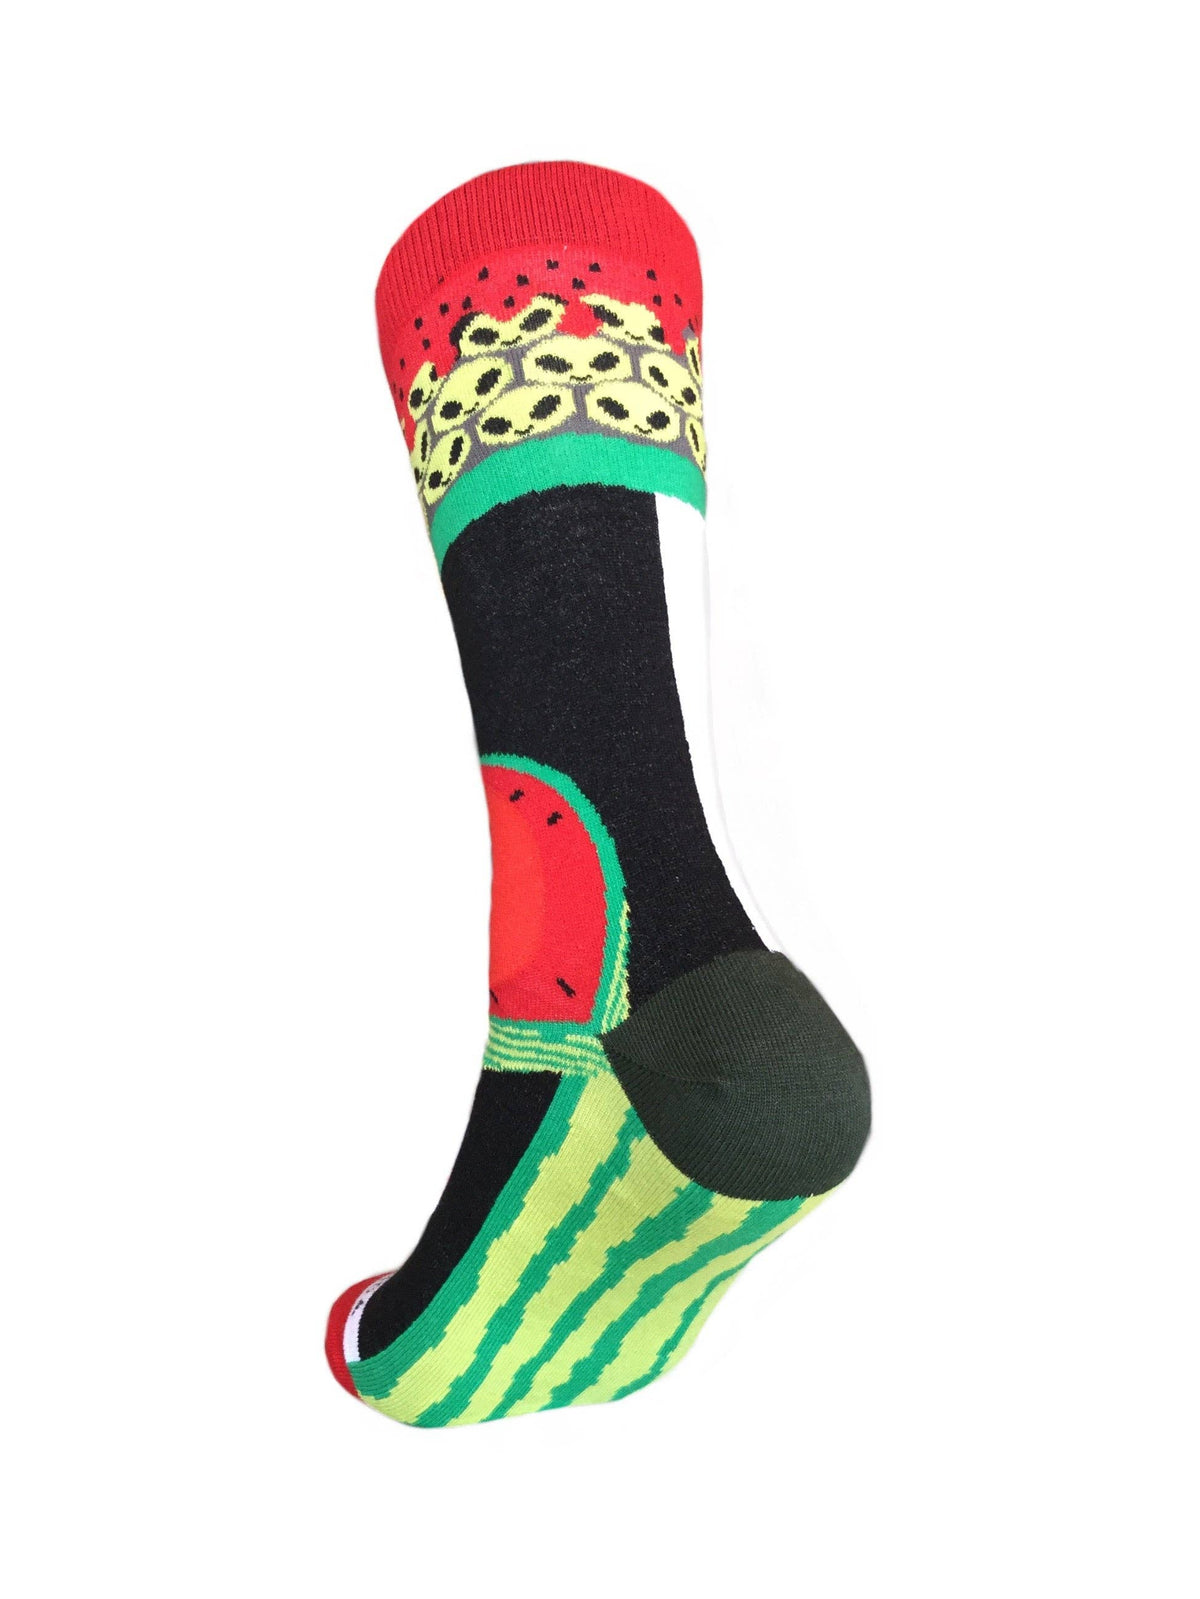 Sock Panda - Skater Alien on a Half Pike Watermelon Socks (Adult Large)